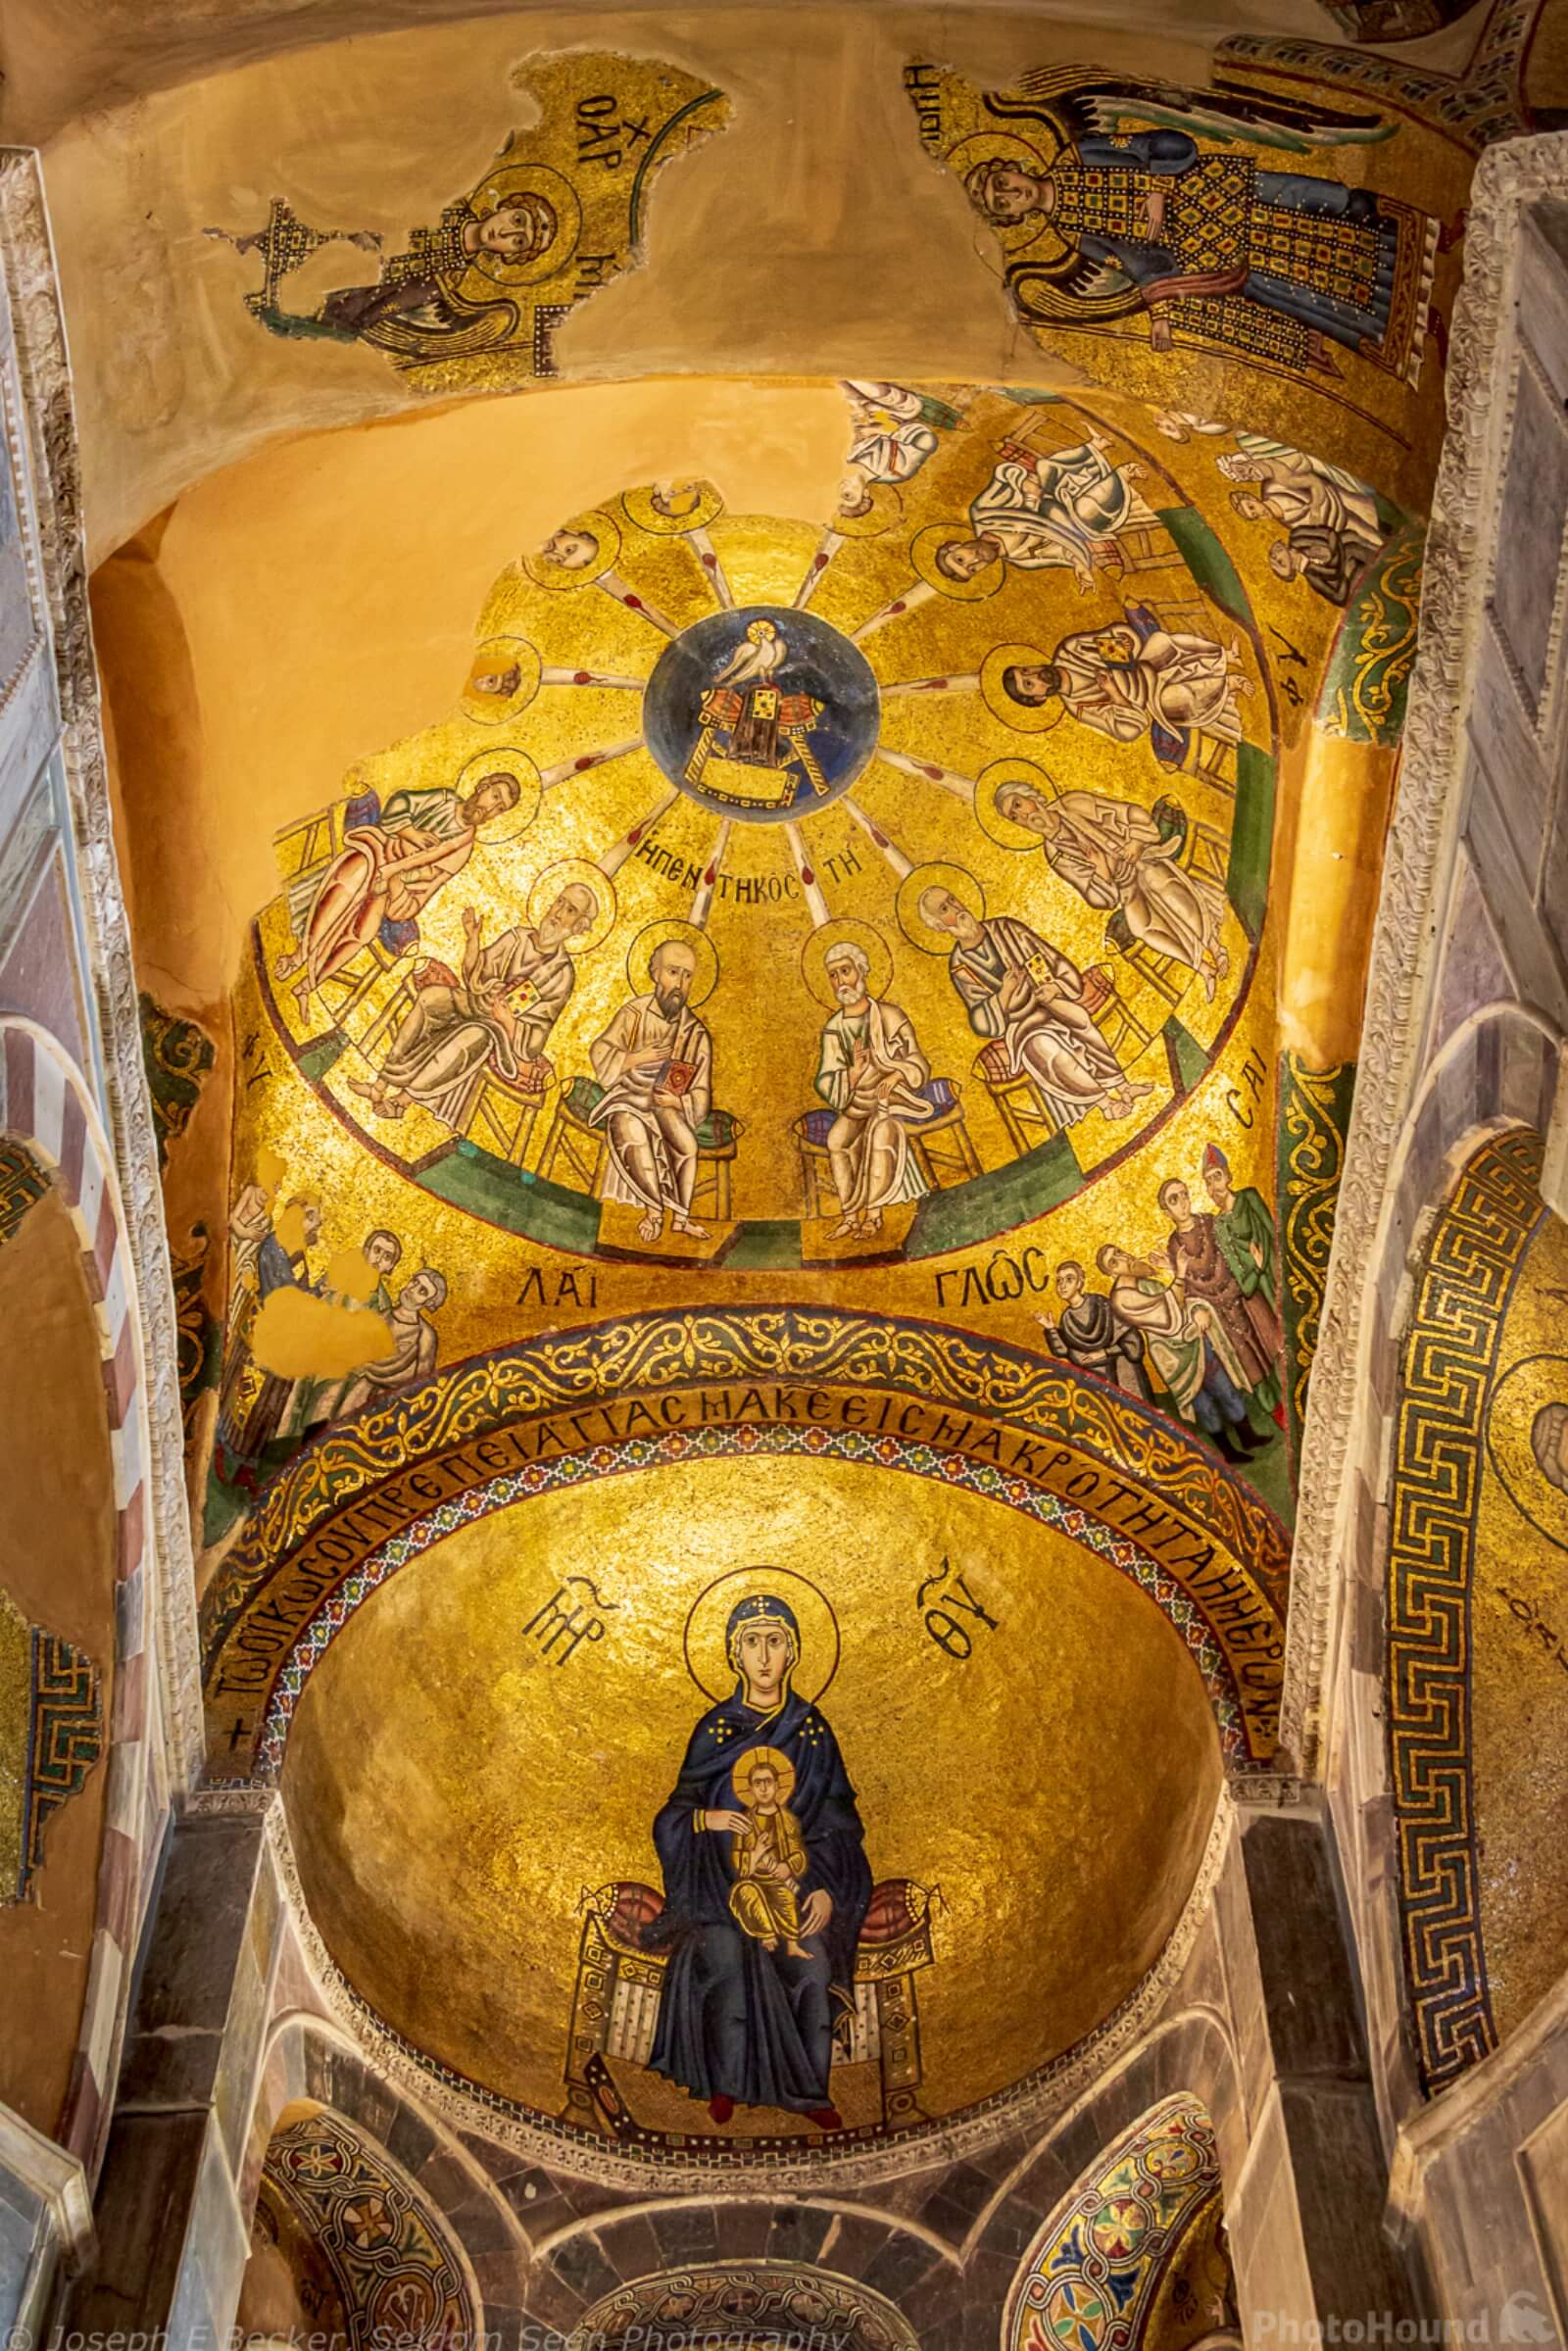 Image of Monastery of Hosios Loukas by Joe Becker